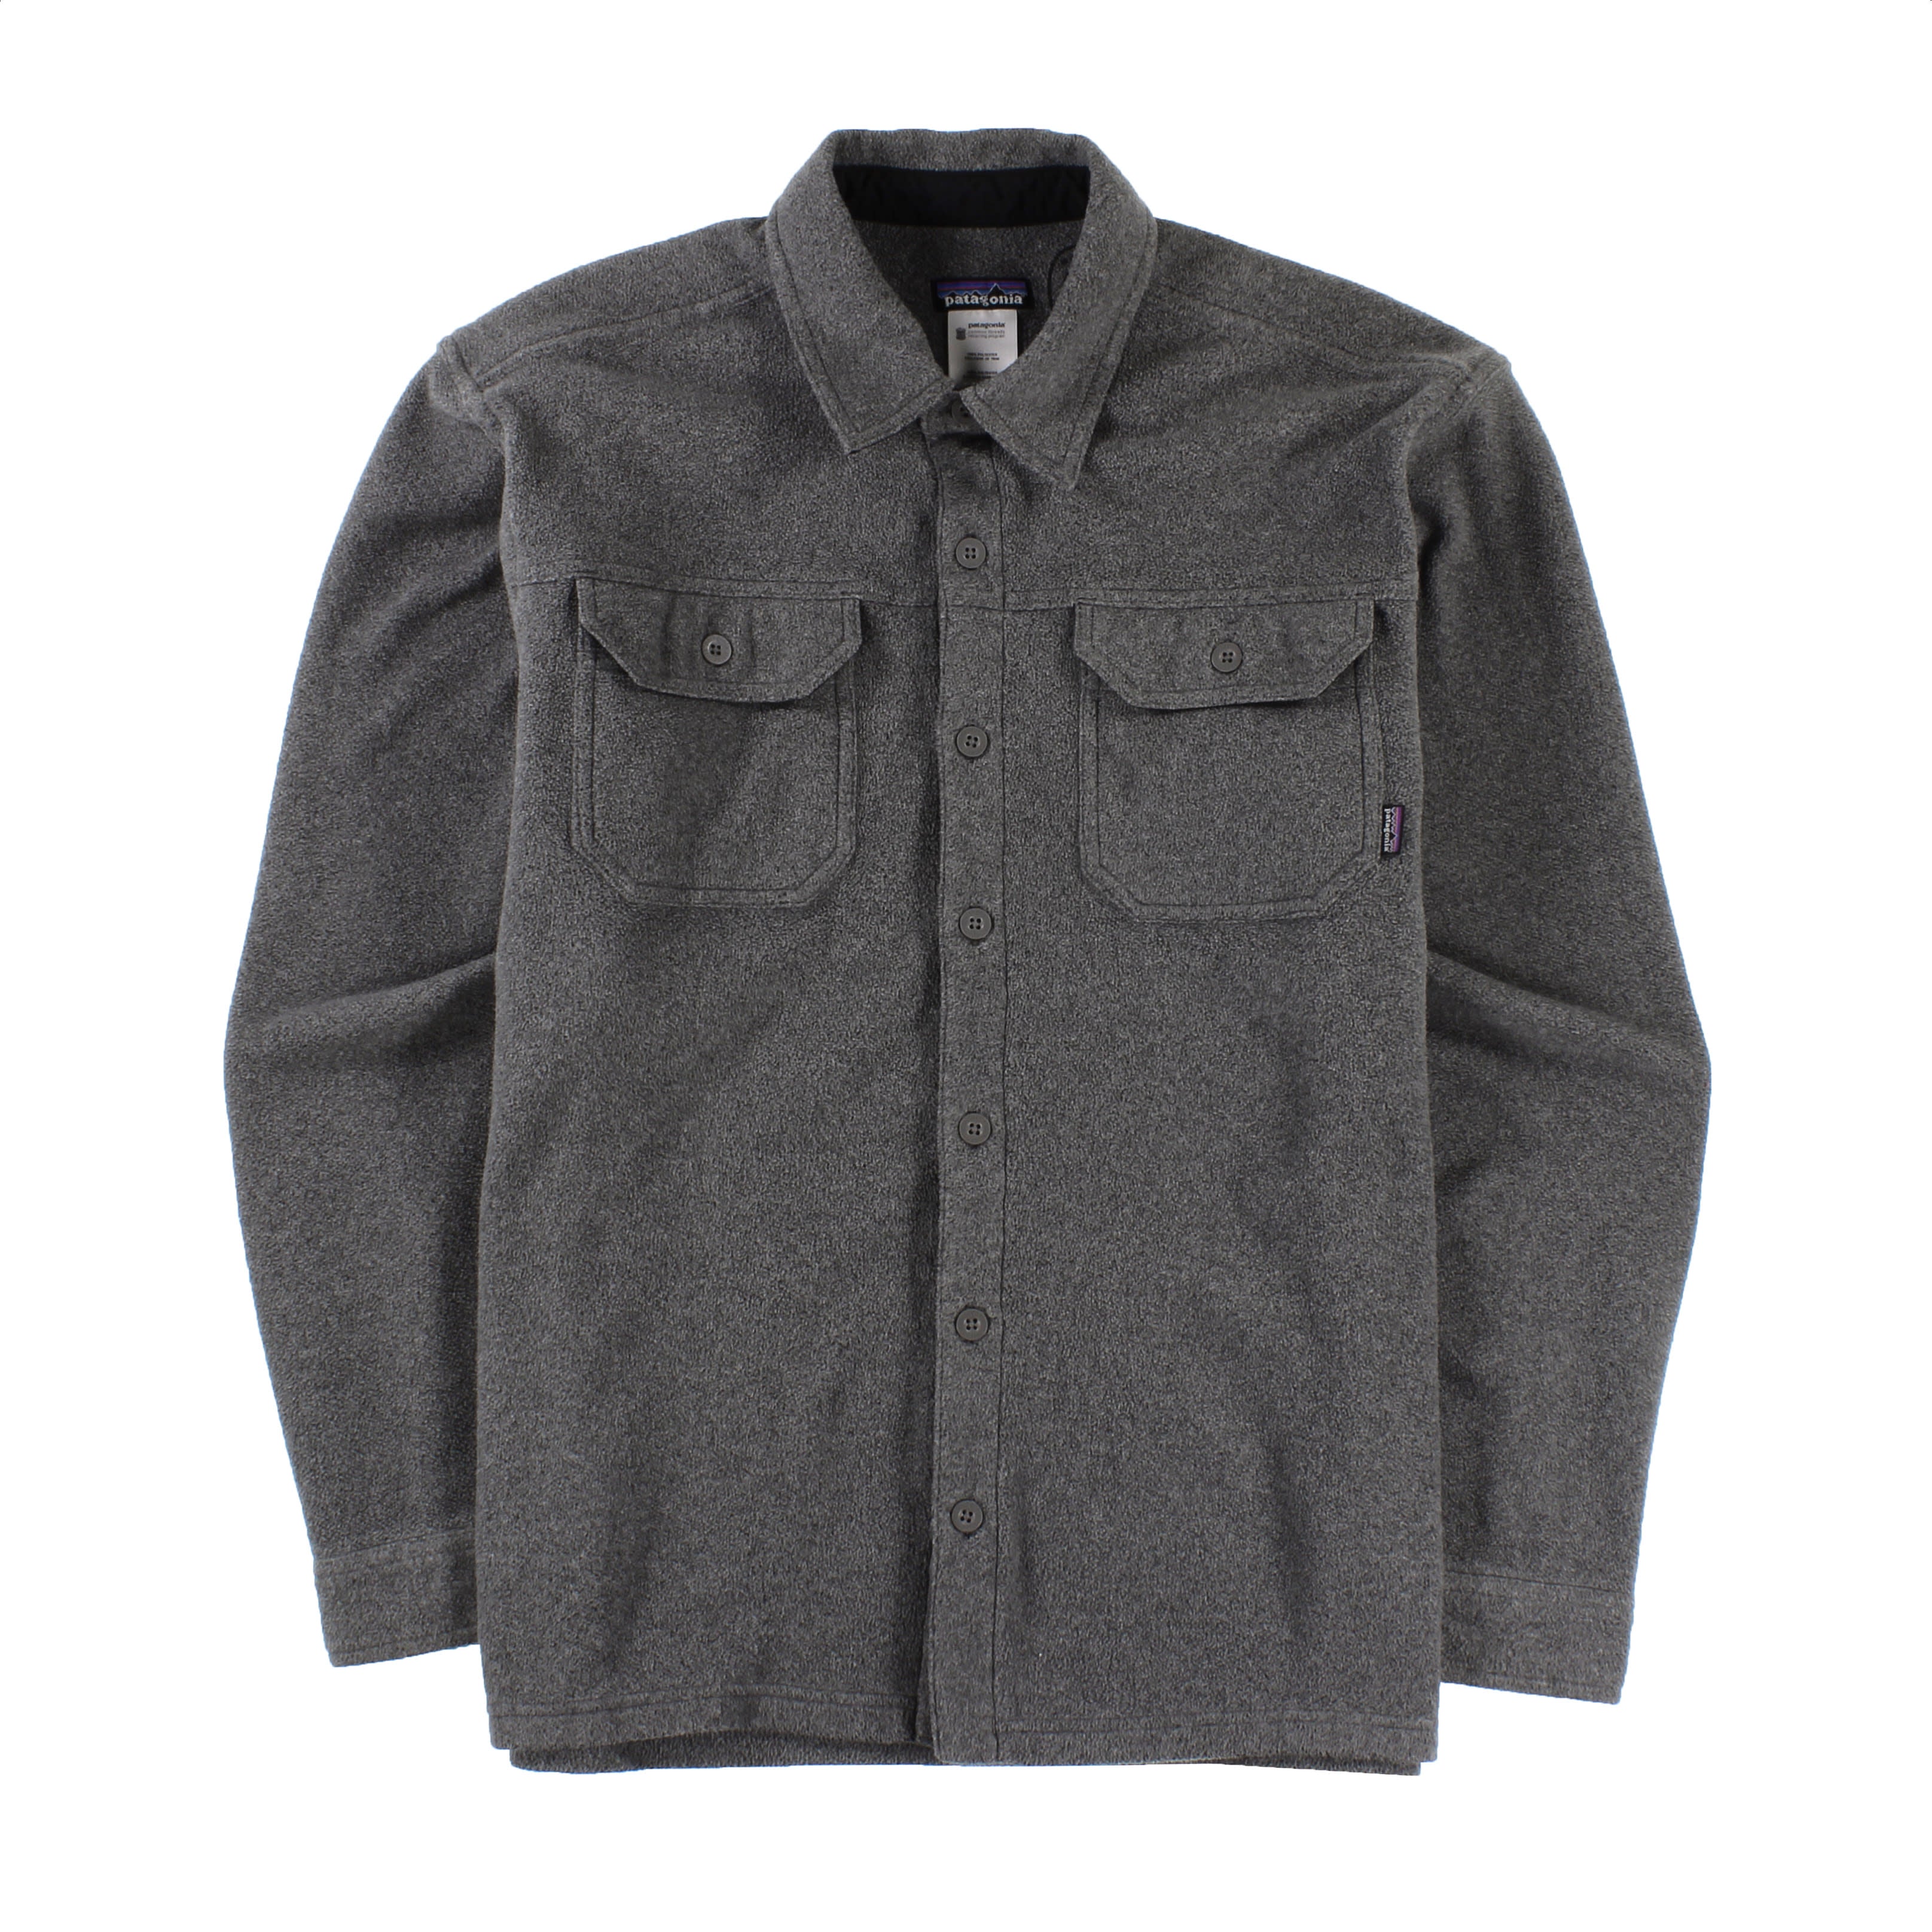 Men's Long-Sleeved Piqué Fleece Shirt